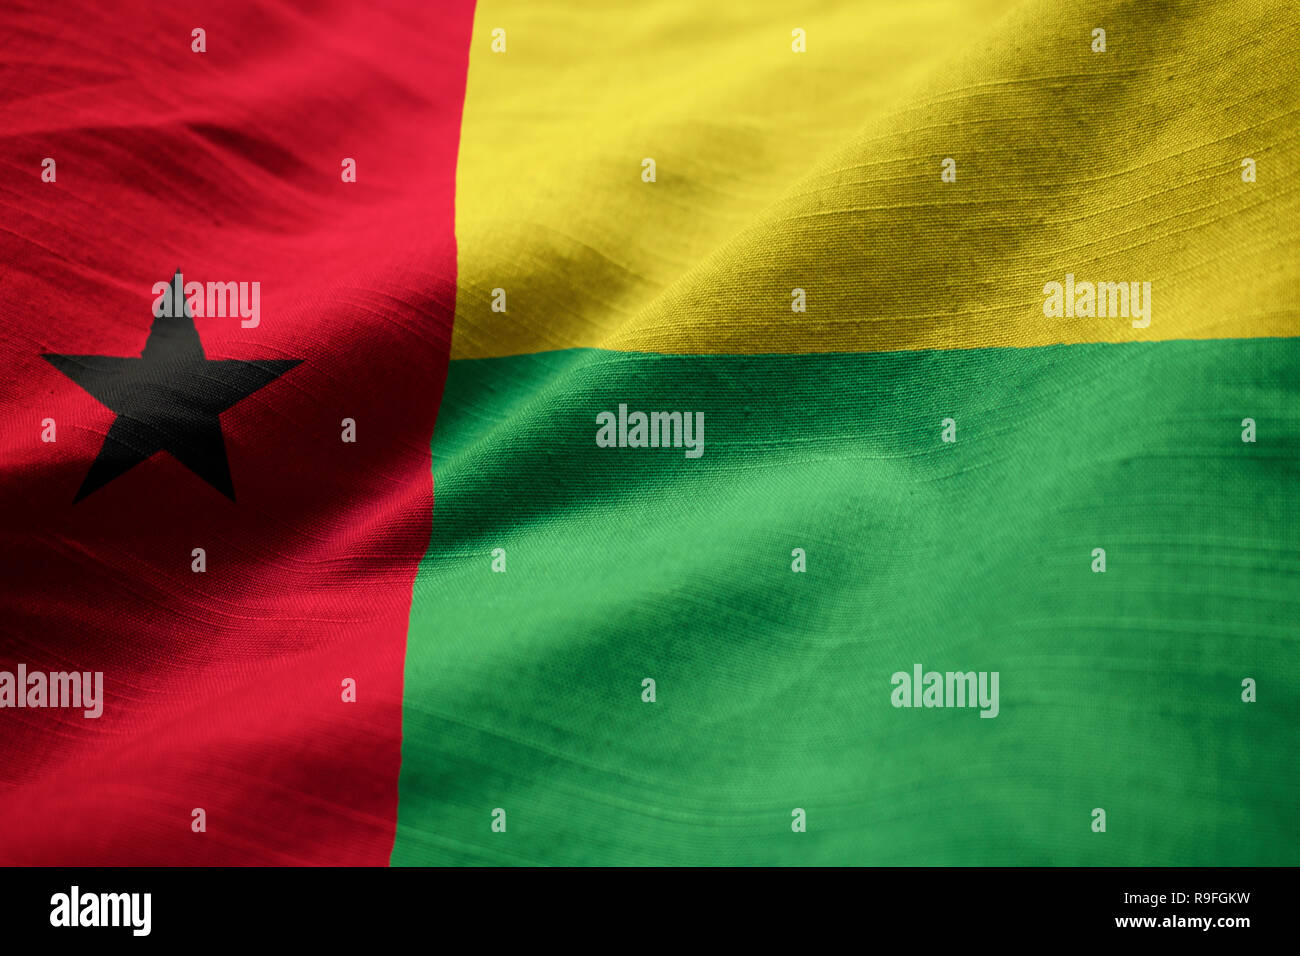 Closeup of Ruffled Guinea-Bissau Flag, Guinea-Bissau Flag Blowing in Wind Stock Photo